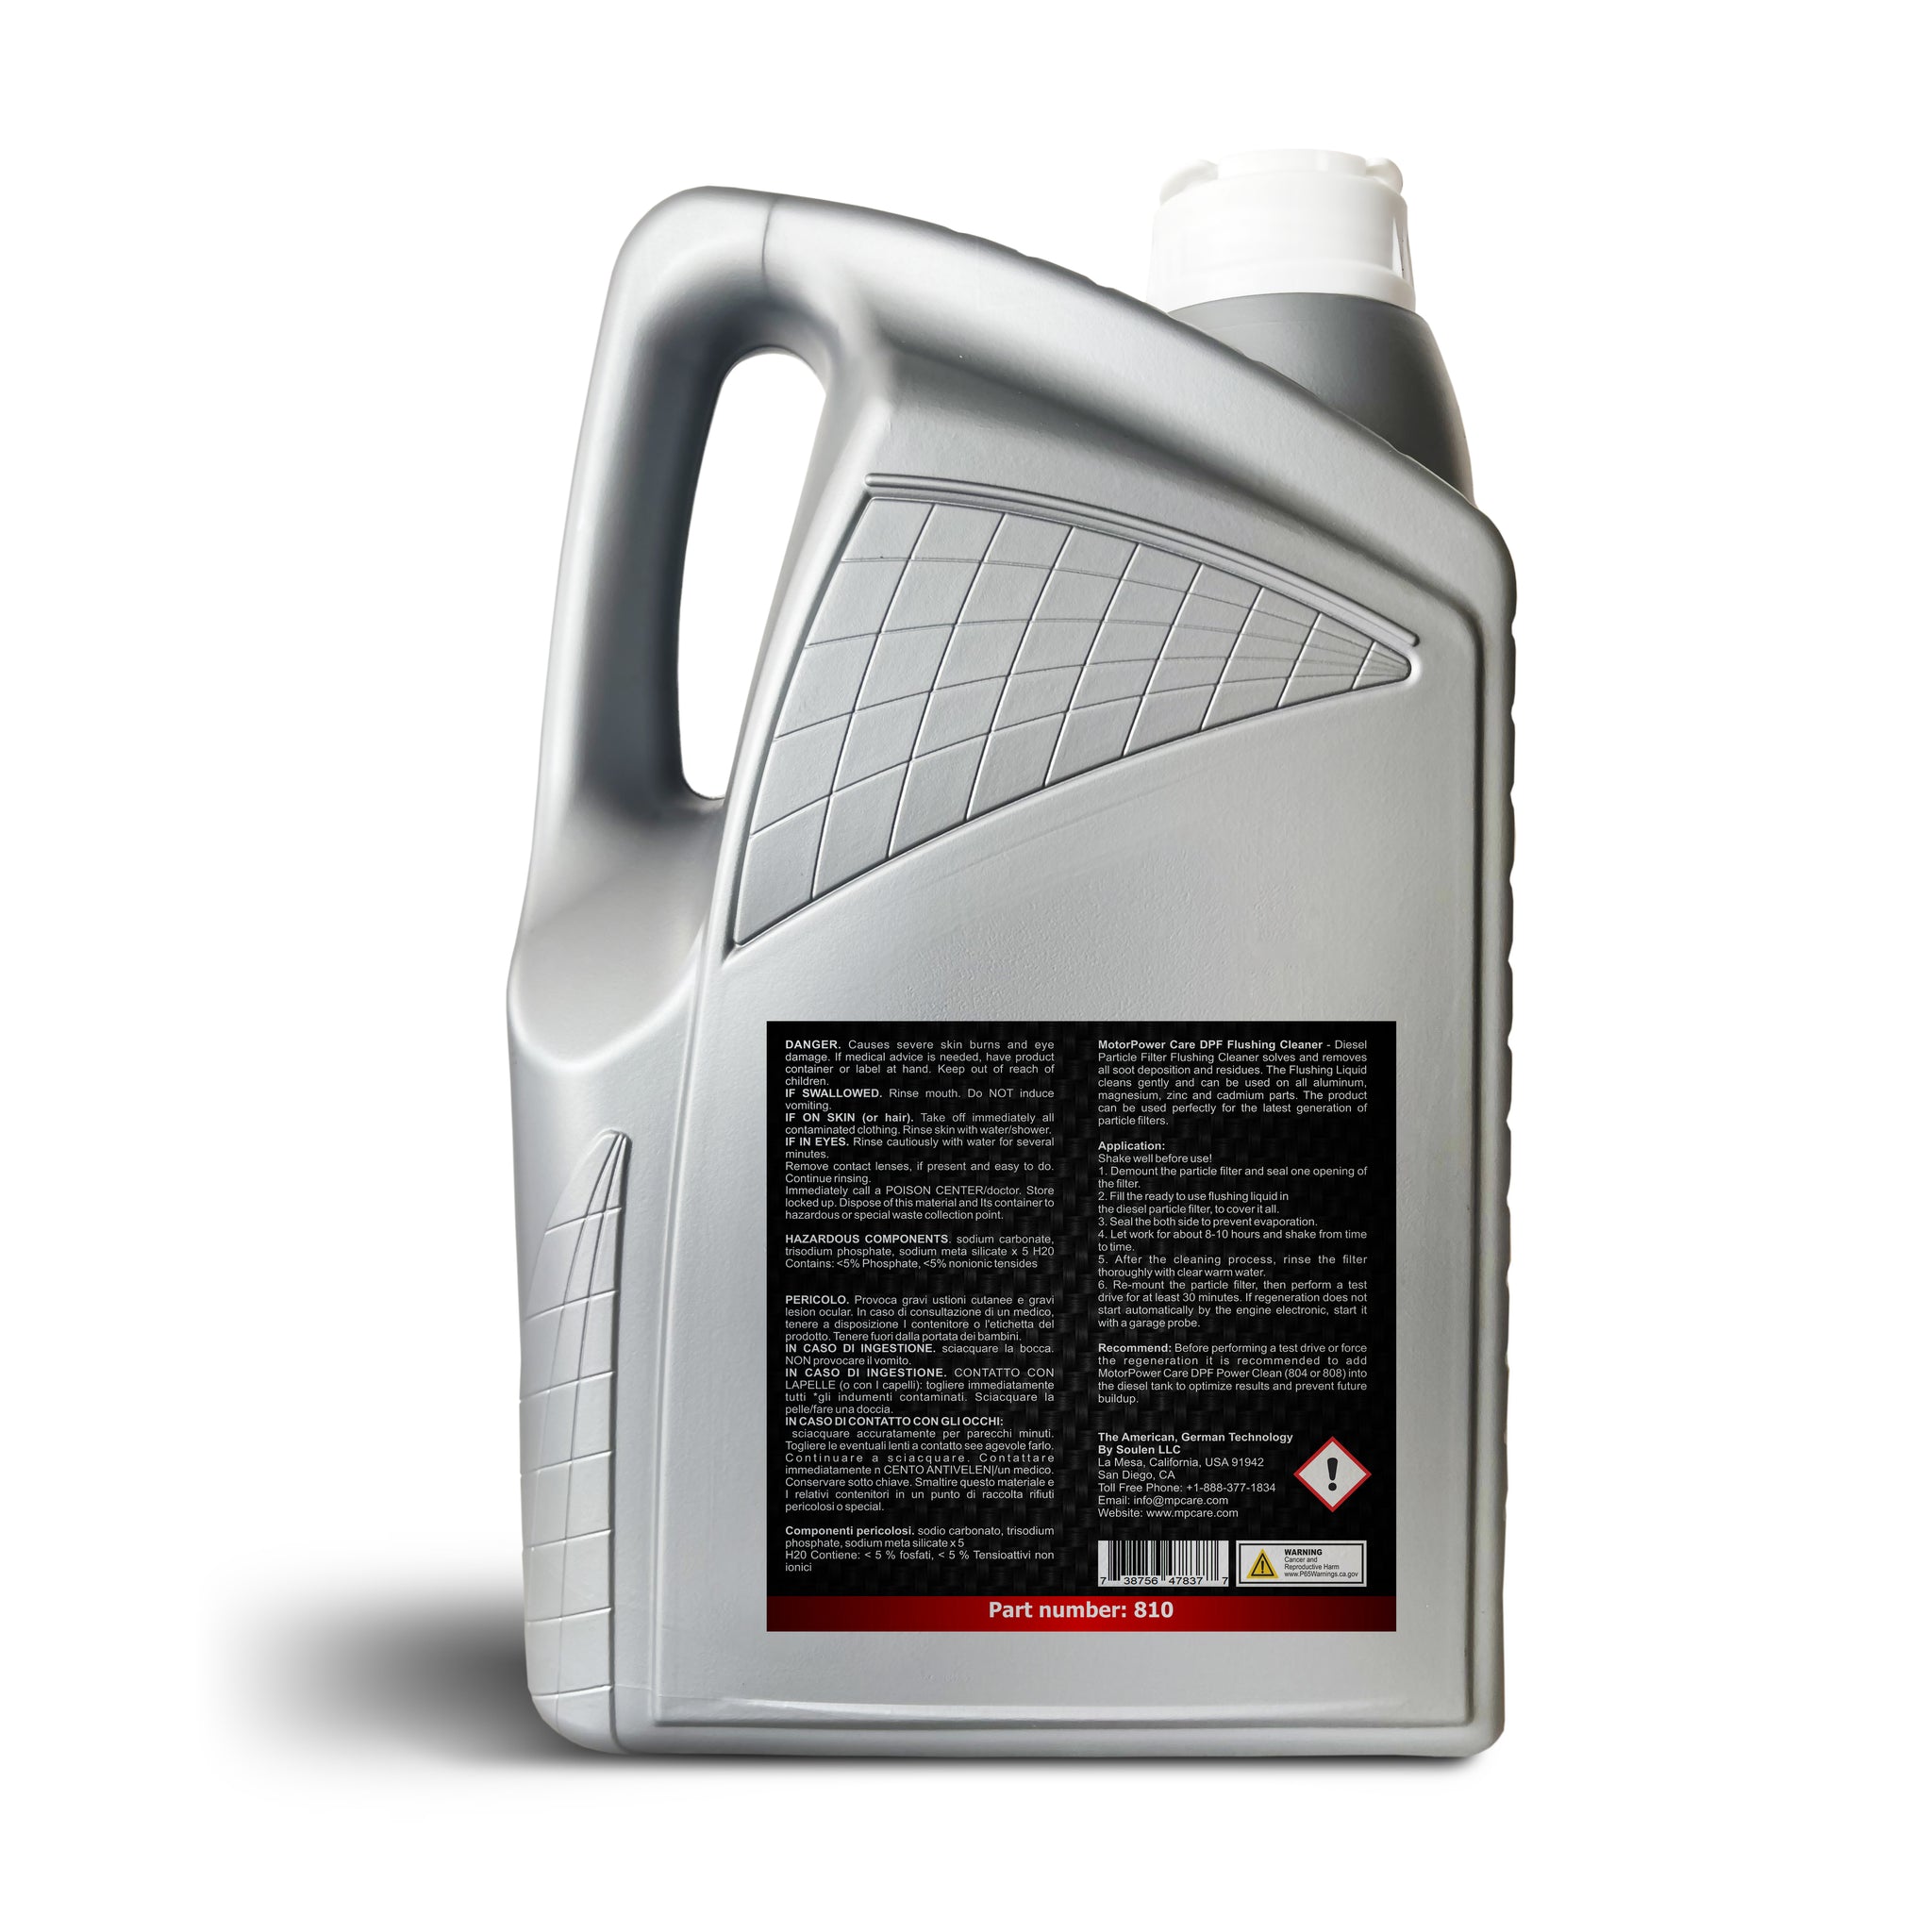 DPF Cleaner & Flush, Additives Diesel